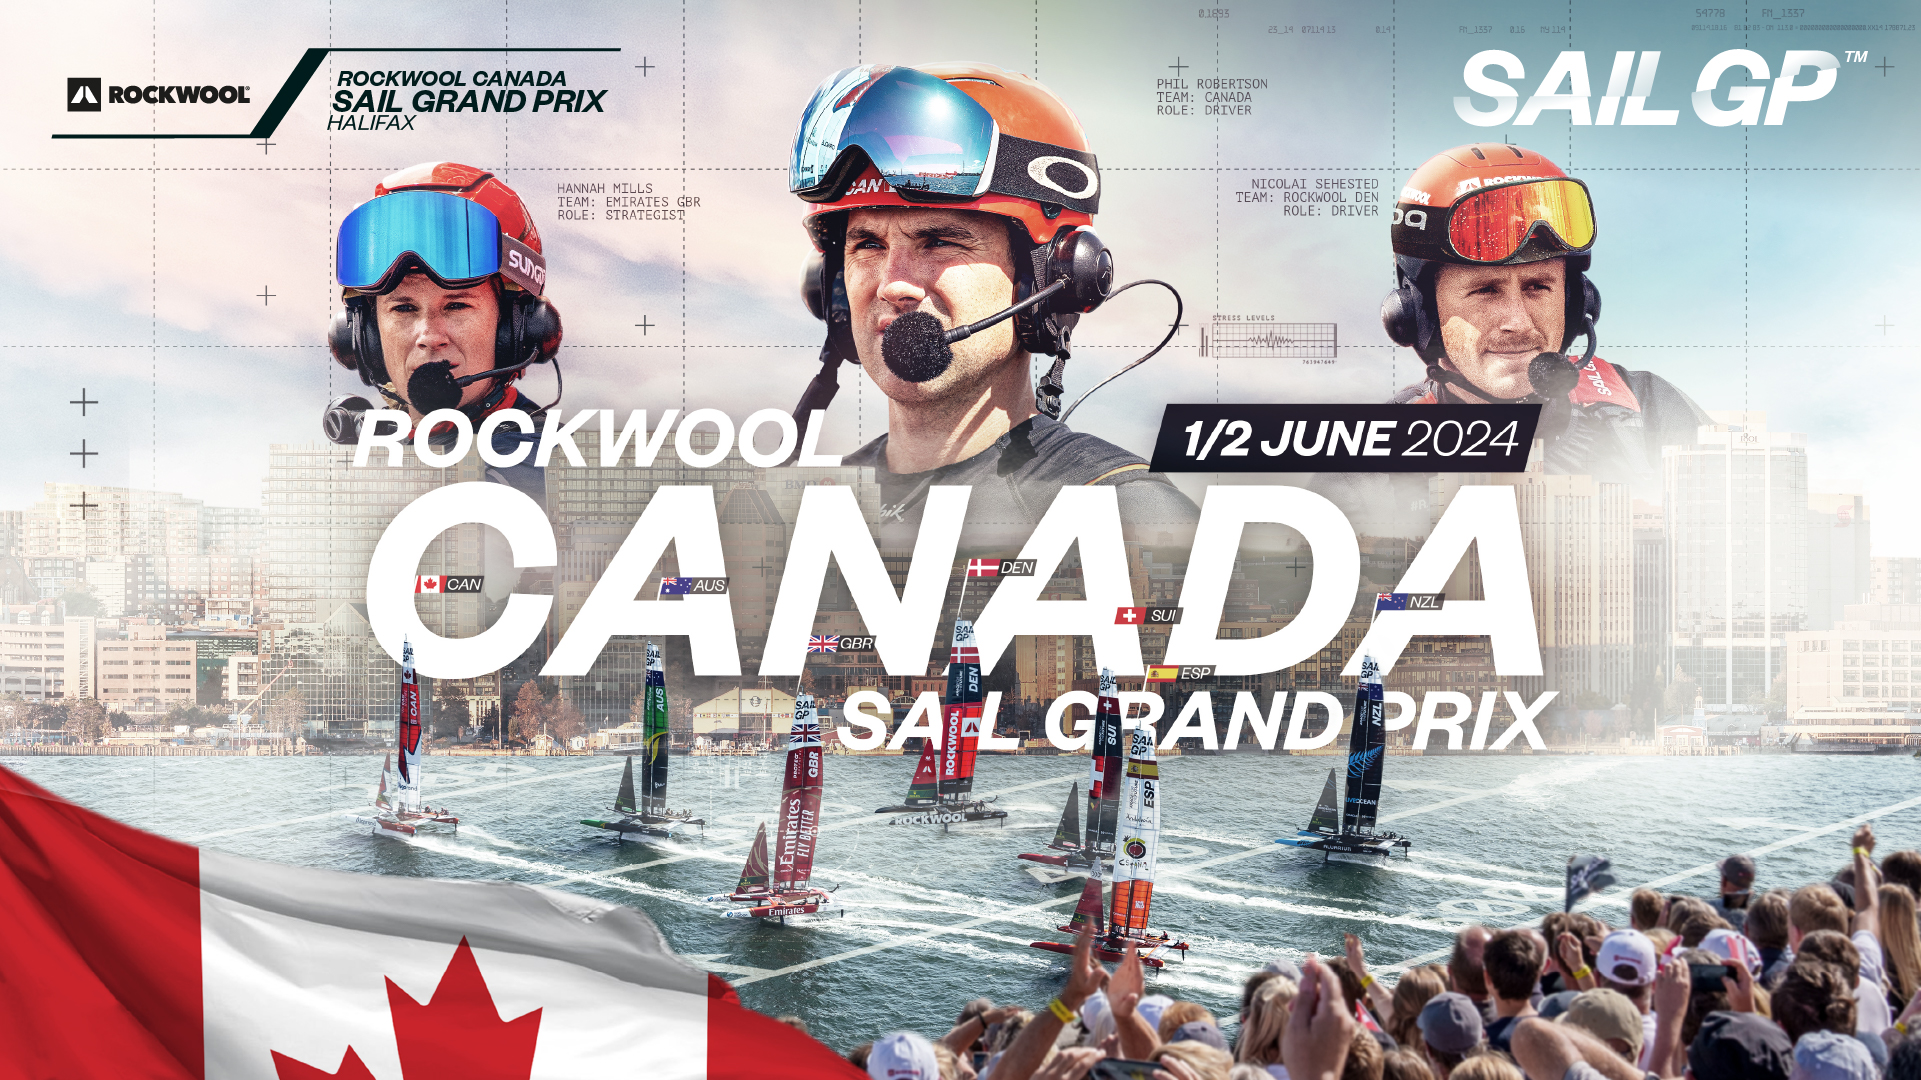 Halifax to host ROCKWOOL Canada Sail Grand Prix SailGP